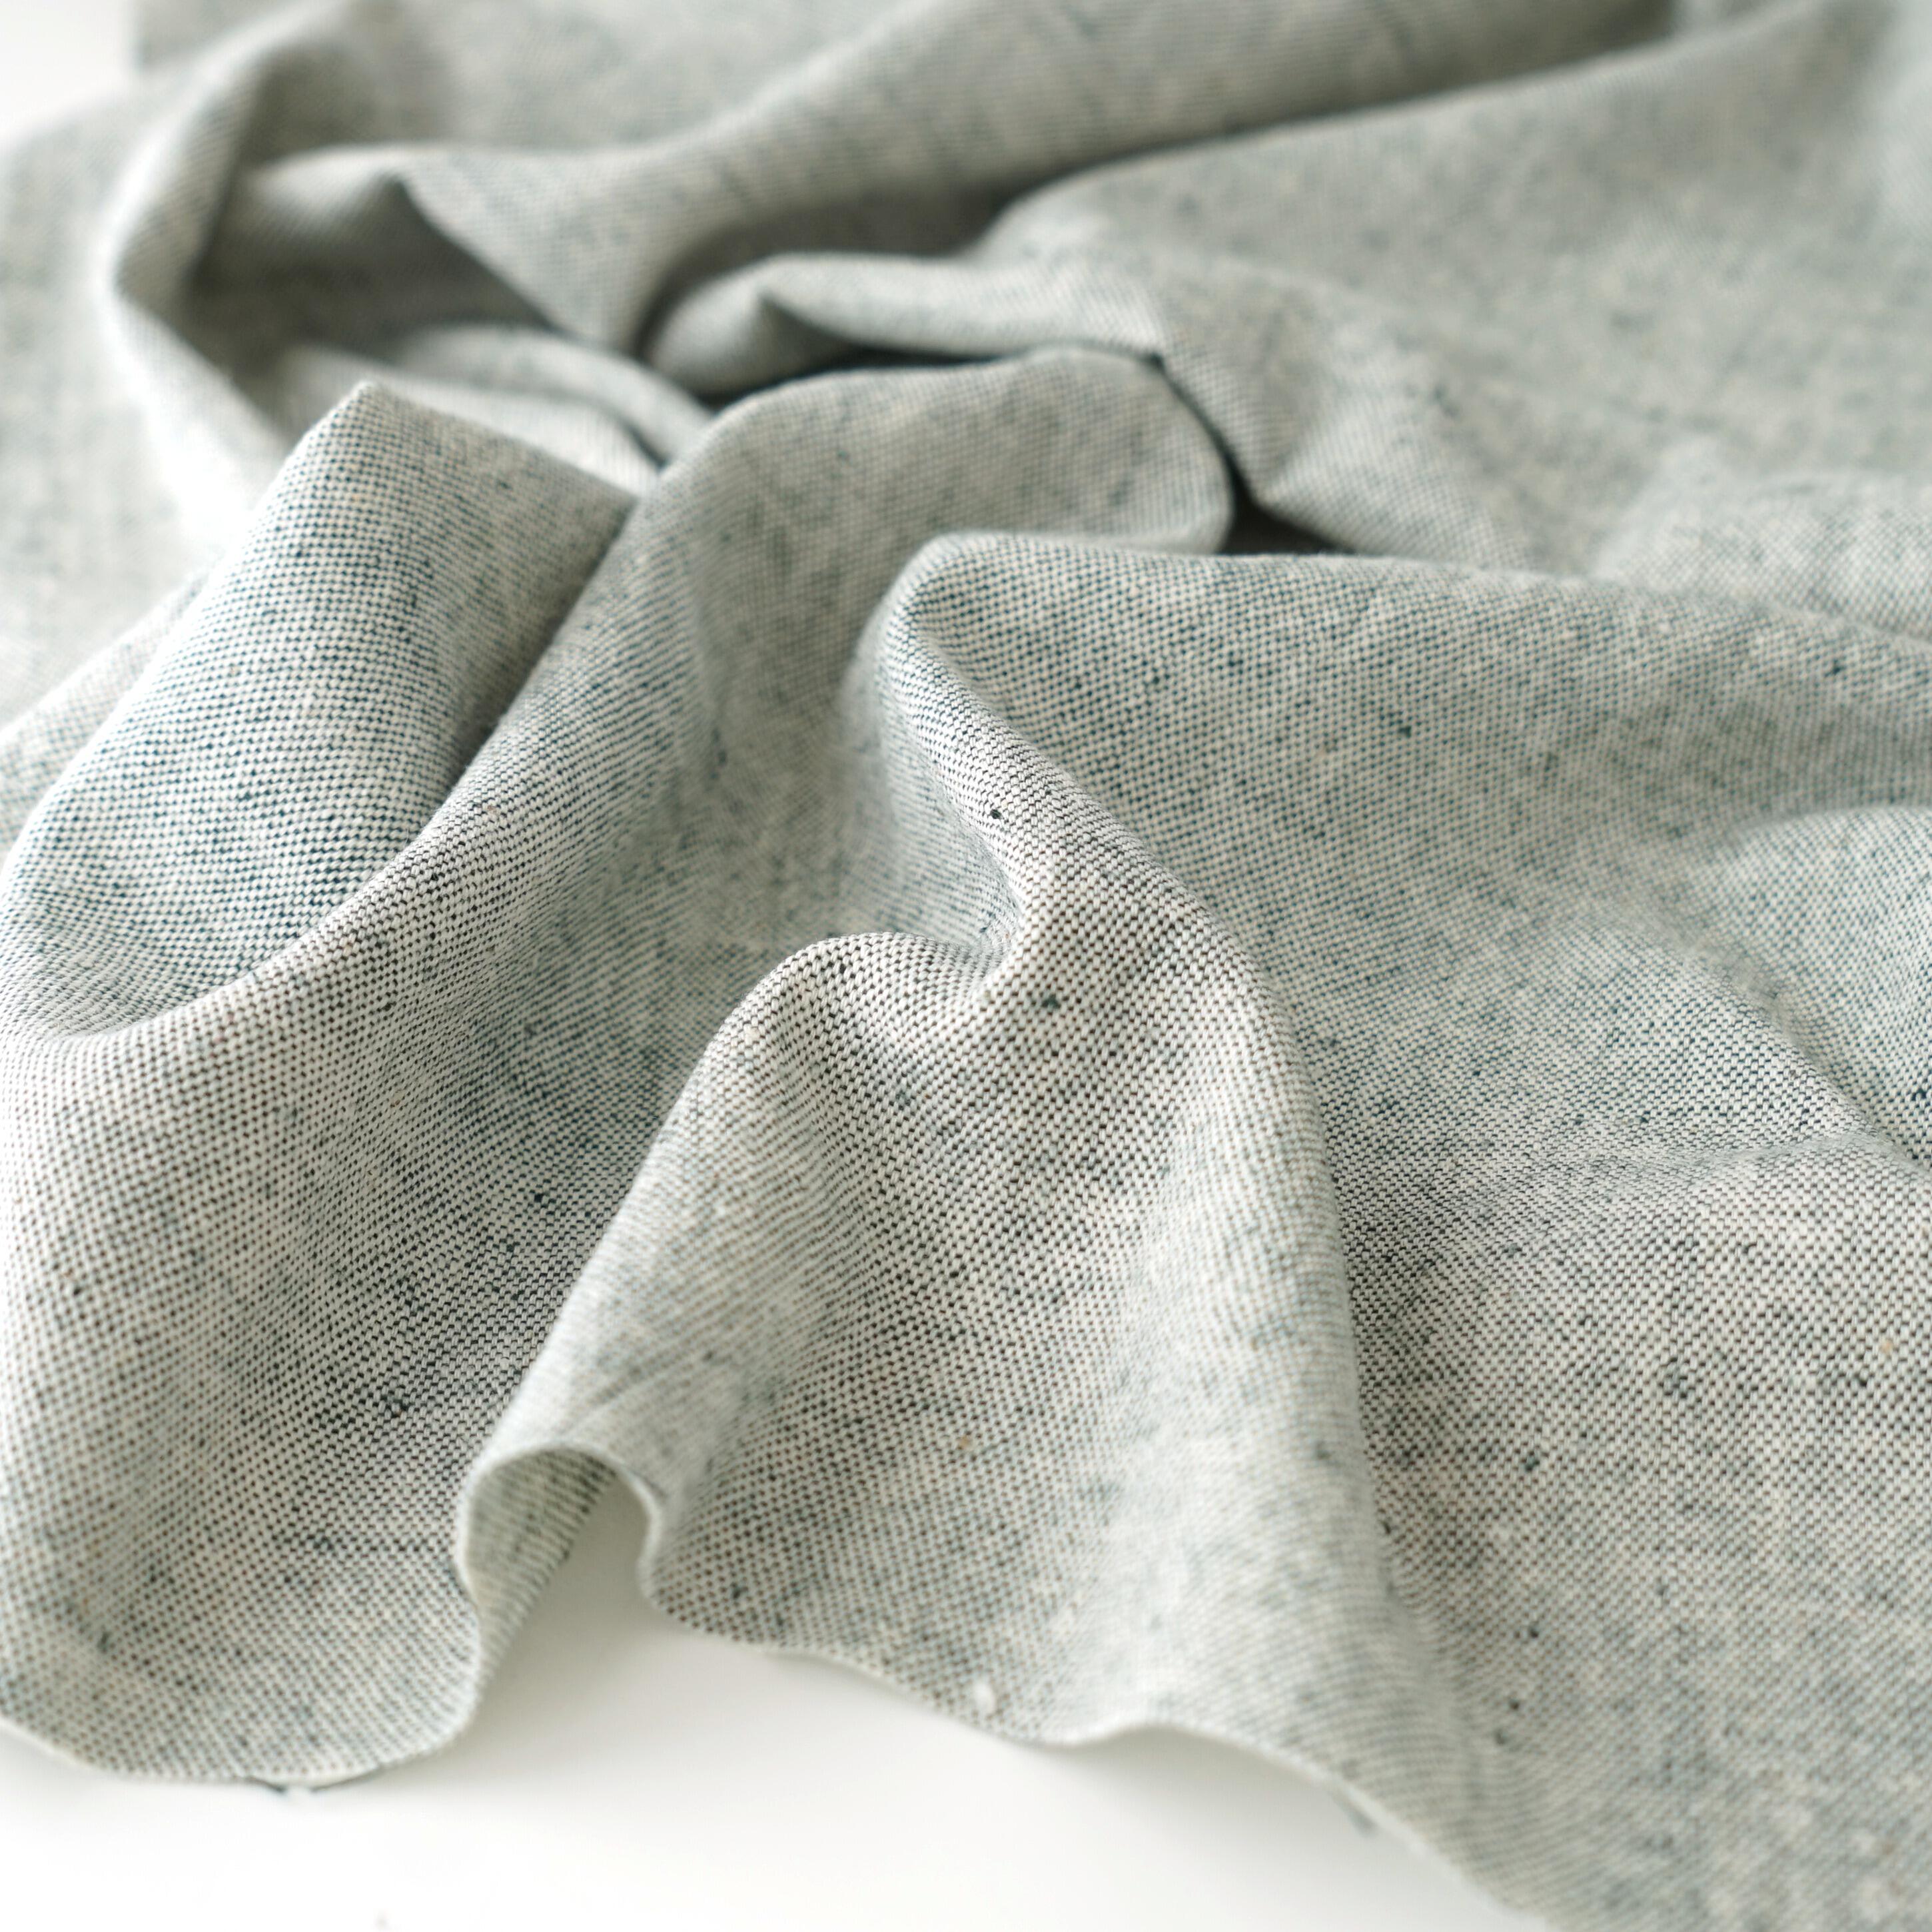 Organic Kala Cotton - Handloom Woven - Irregular Basket Weave - 2 by 1 - White & Olive Green - Yarn Dye - Shot Cotton - Contrast